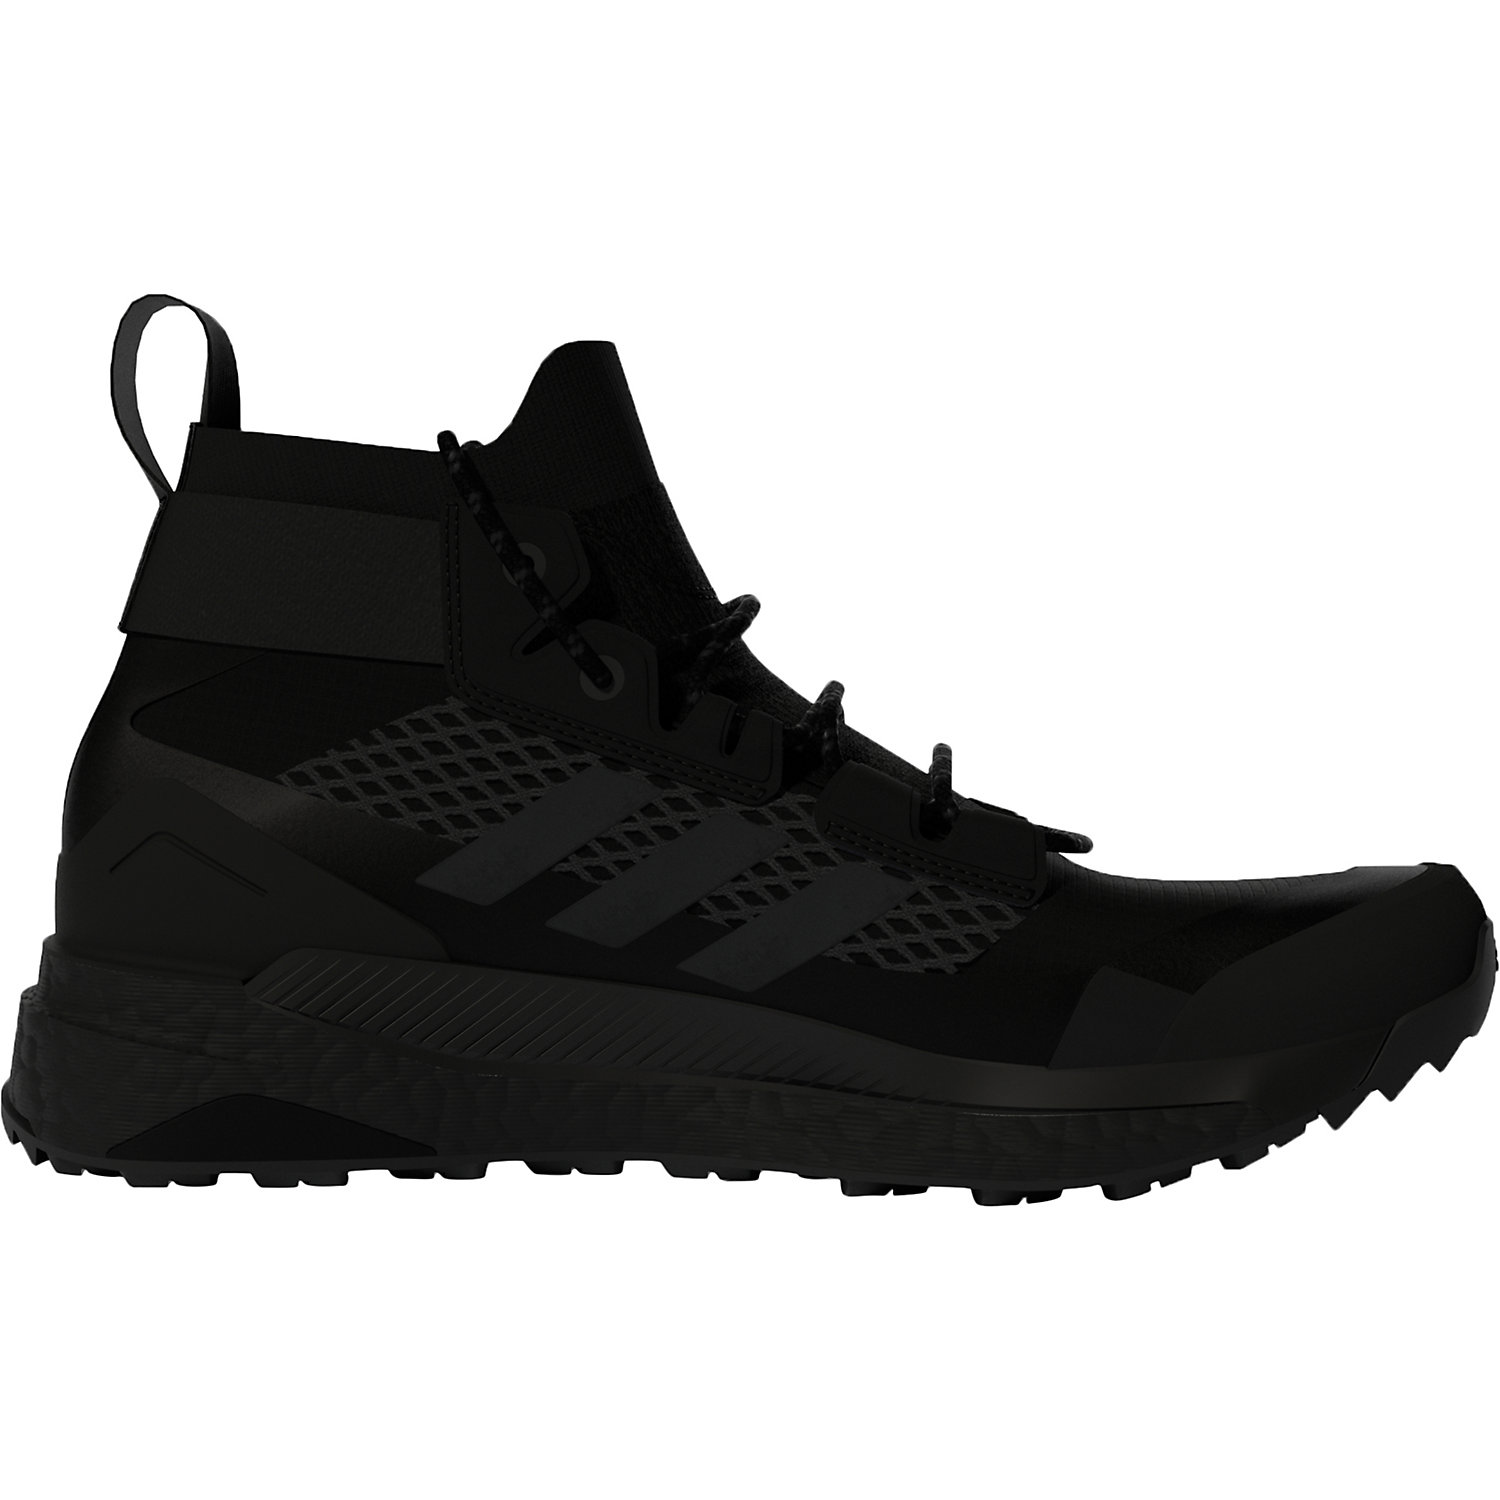 Adidas Mens Terrex Free Hiker GTX Shoe